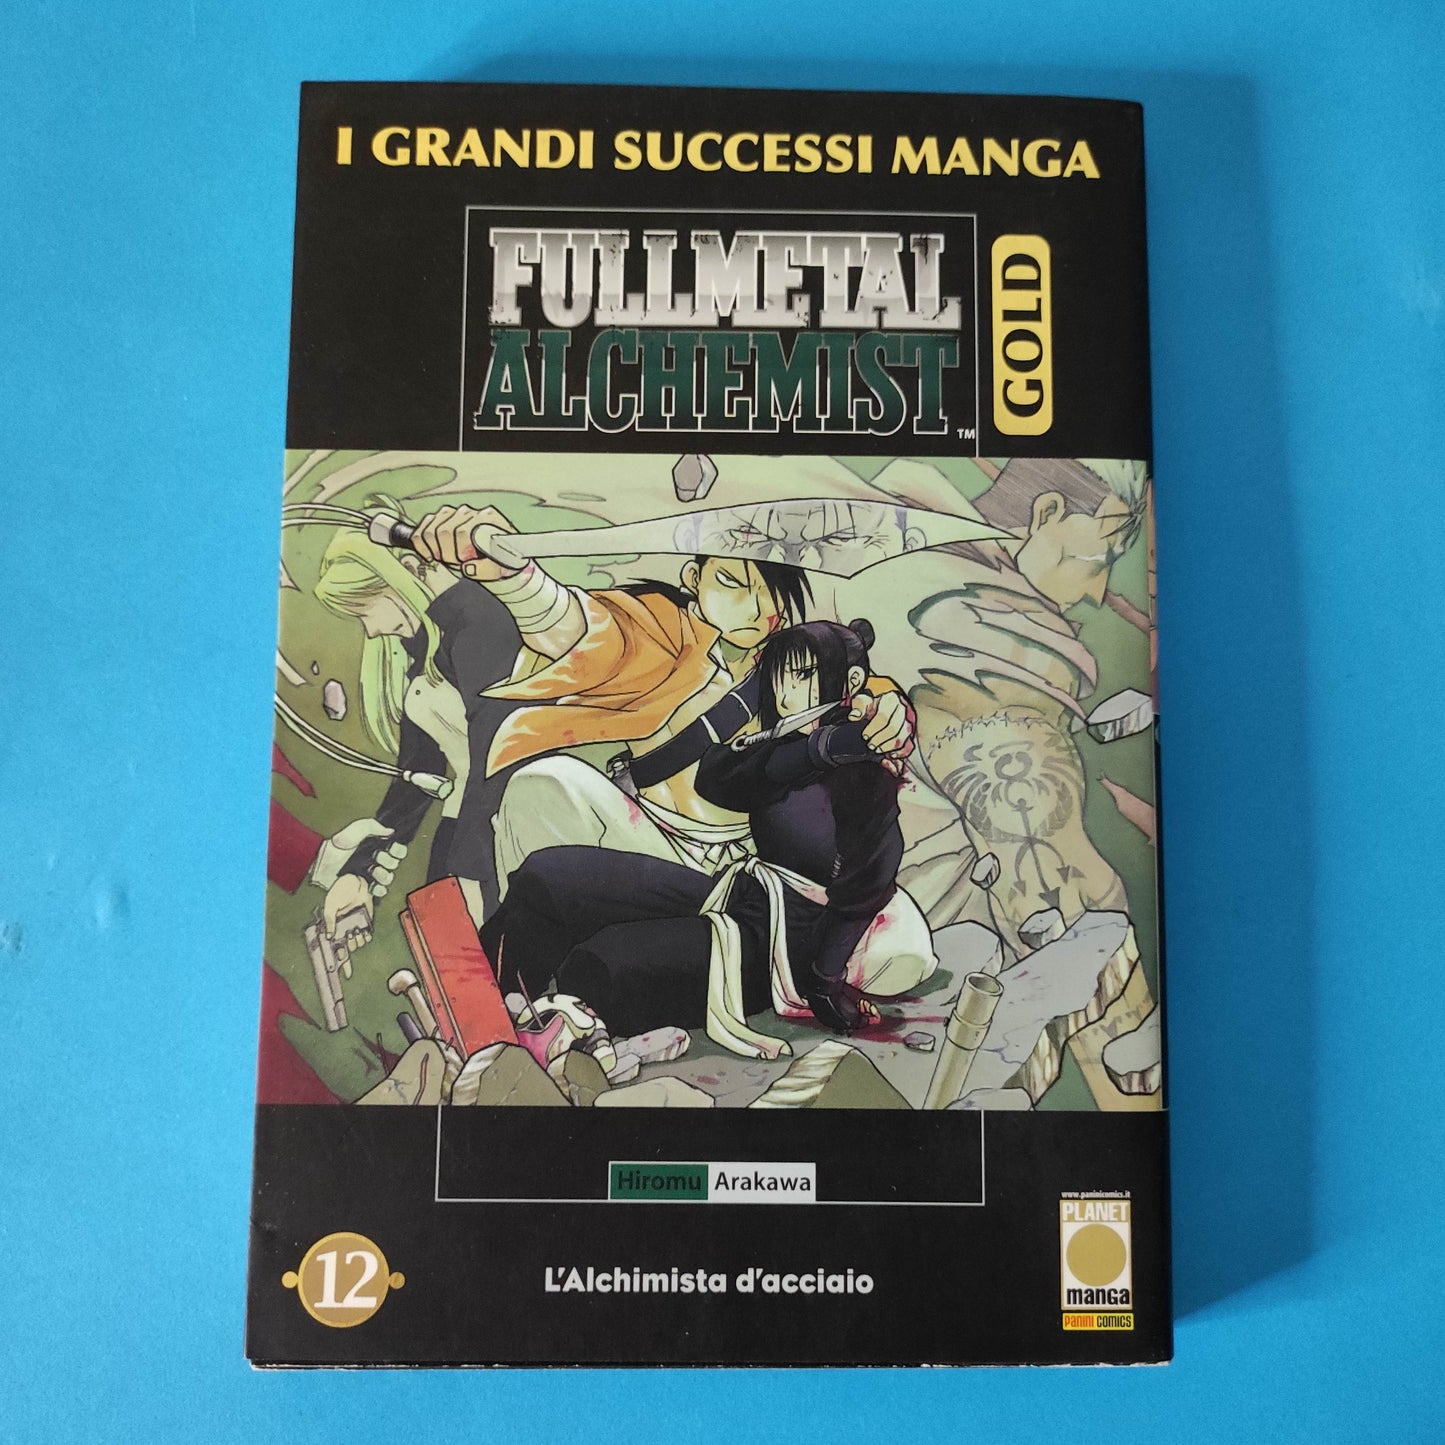 Fullmetal Alchemist GOLD - VOLUMI SFUSI - Planet Manga